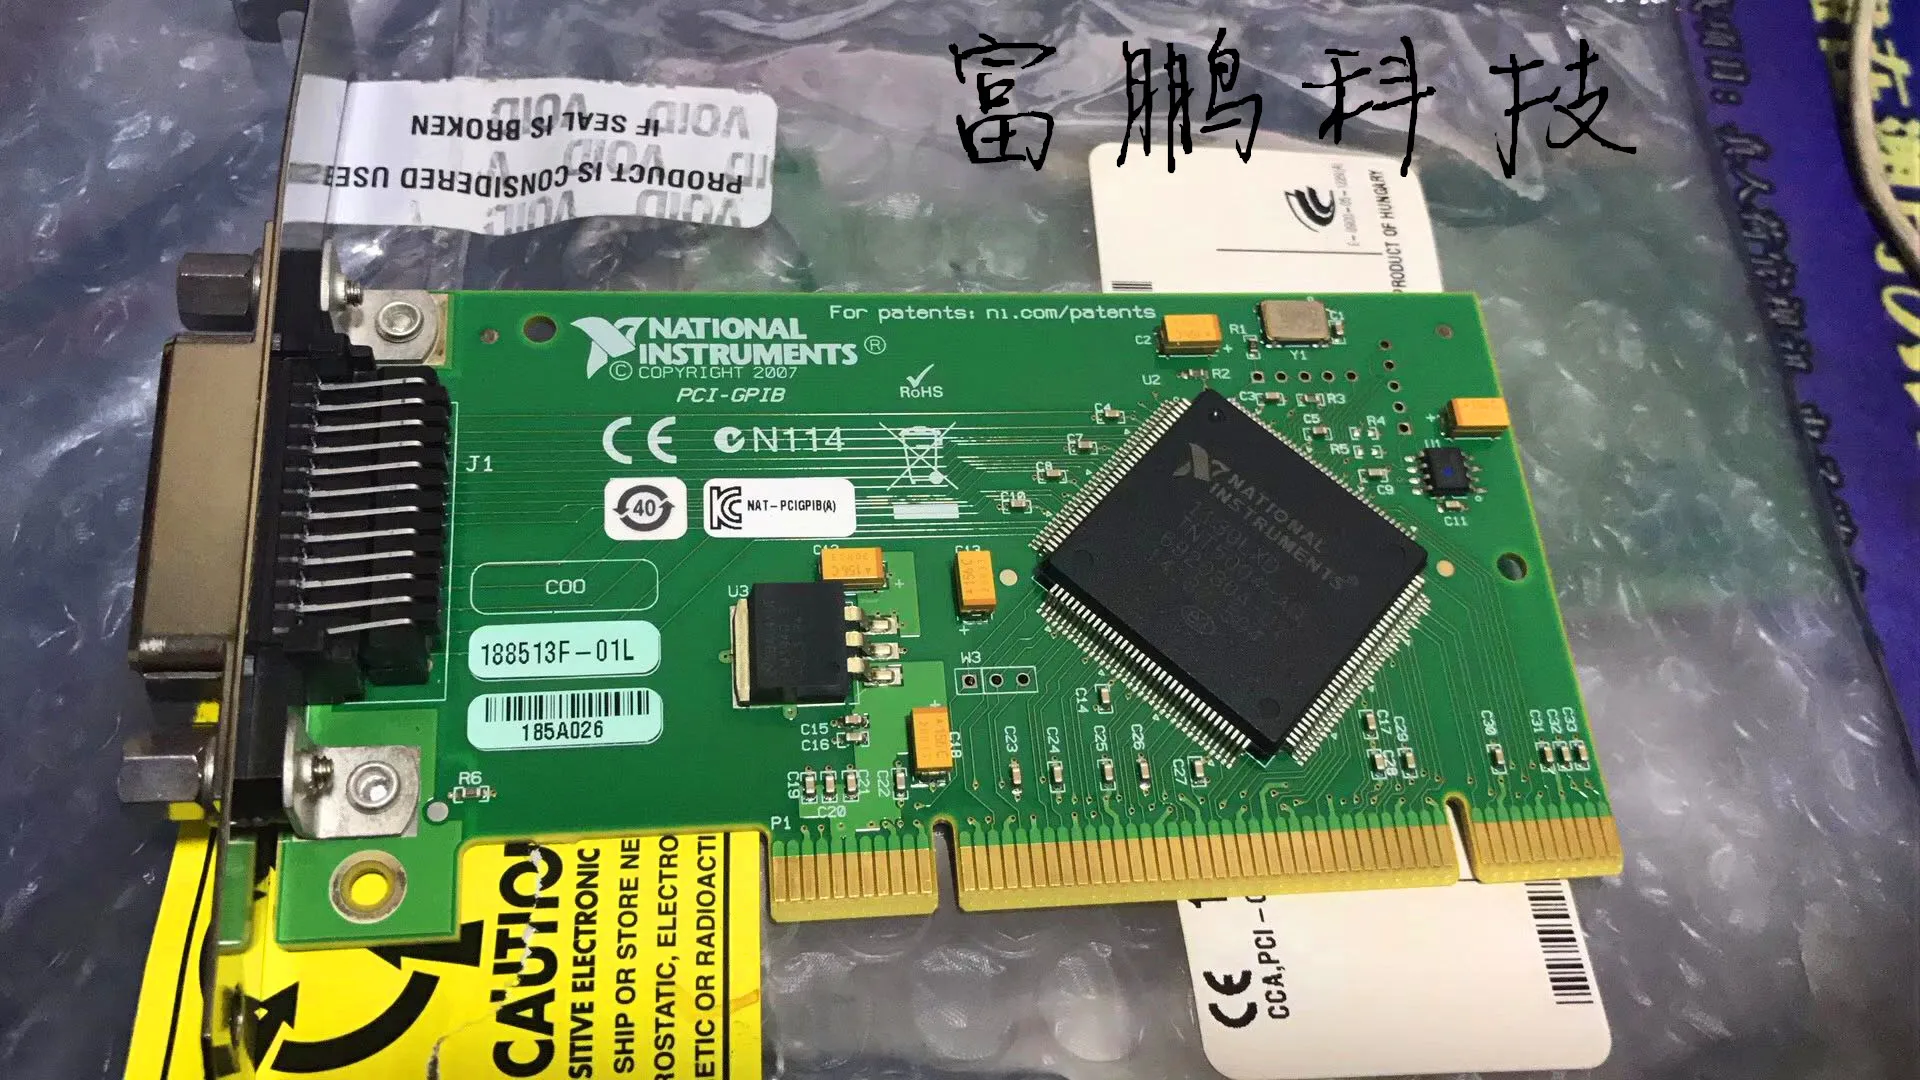 

New Original NI-PCI-GPIB Small Card IEEE488 Card 778032-01